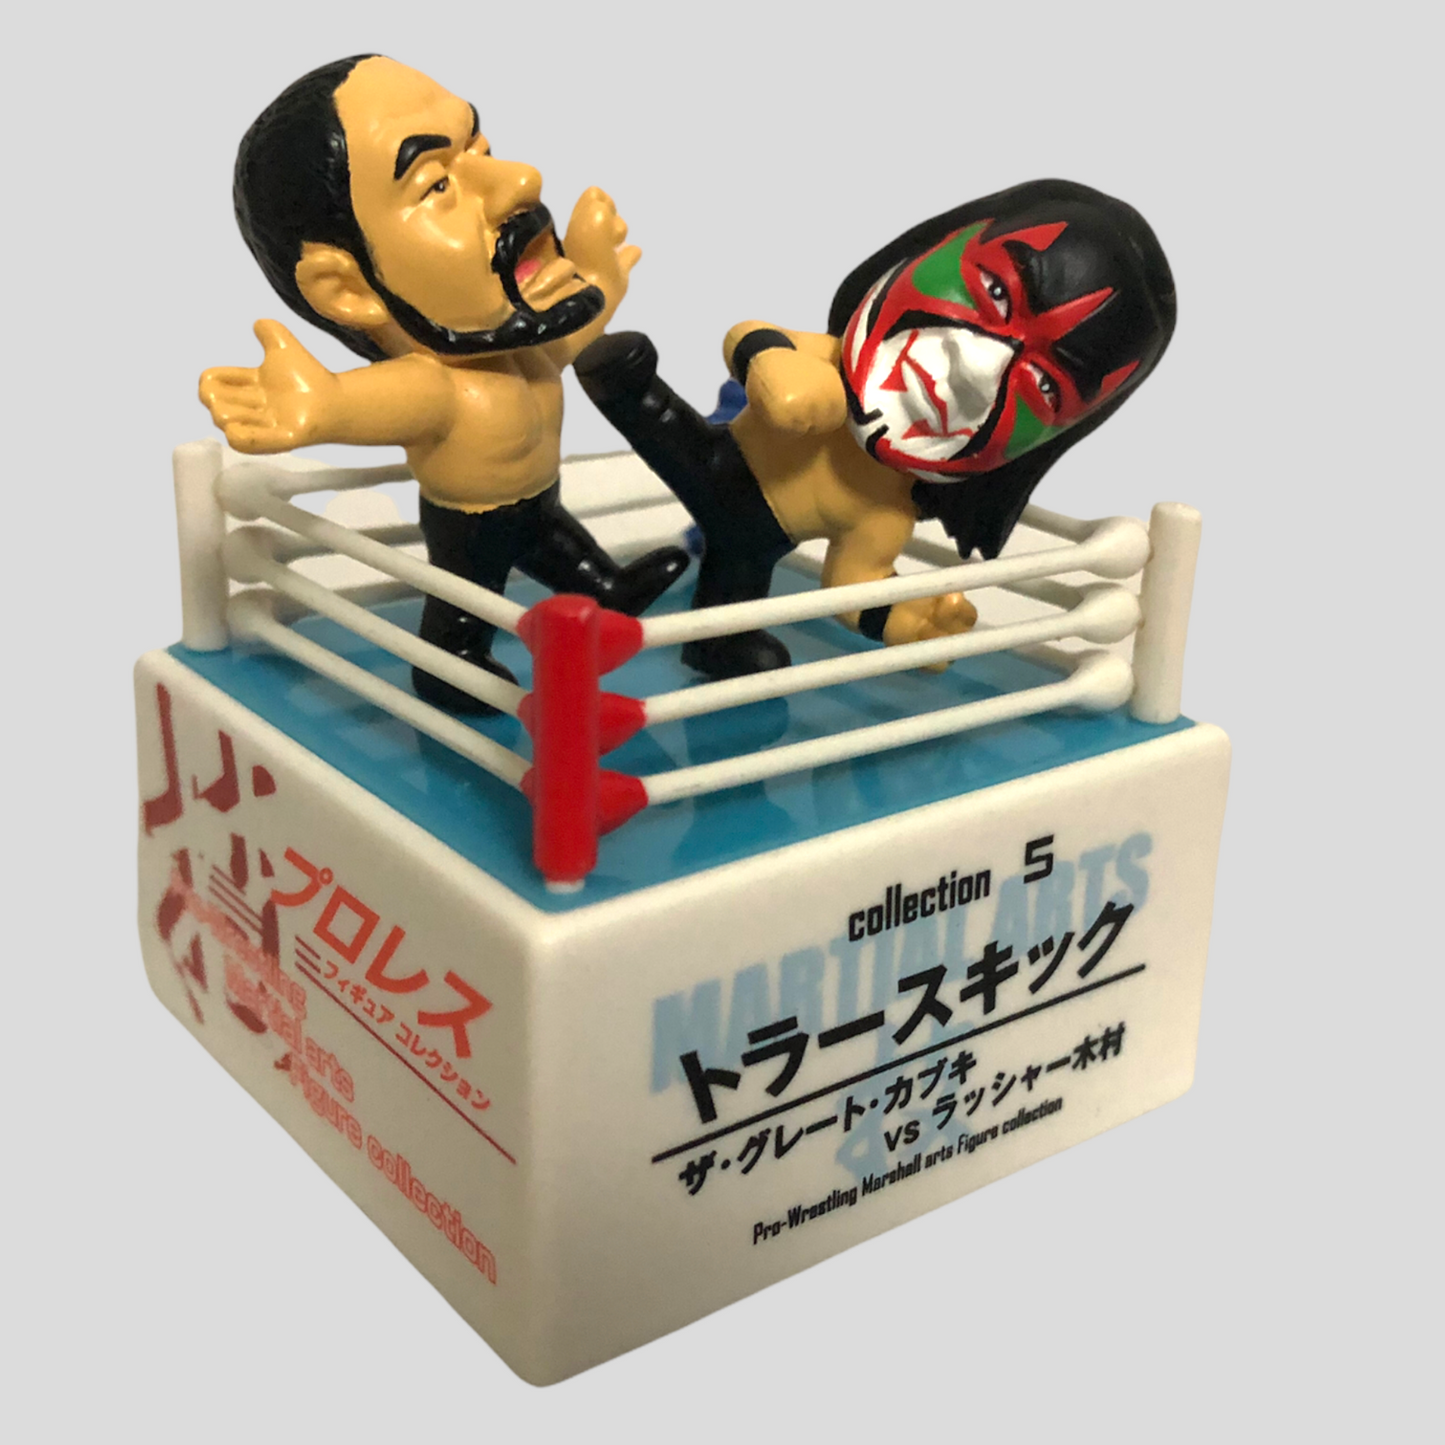 2006 Boford Martial Arts Pro-Wrestling Figure Collection 5 "Thrust Kick": The Great Kabuki vs. Rusher Kimura